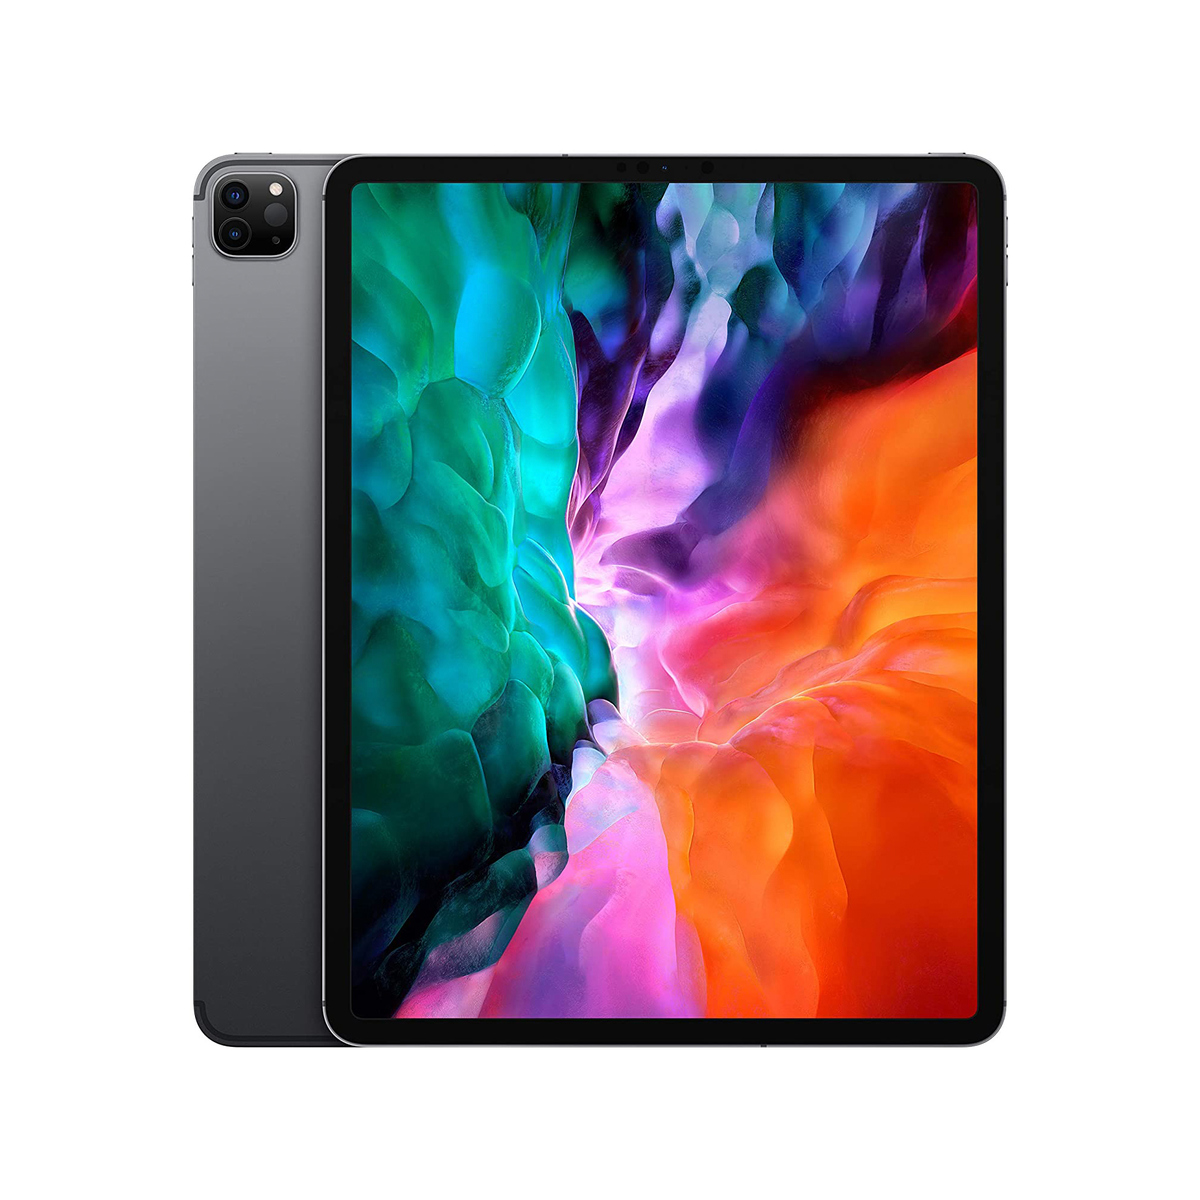 Apple iPad Pro (12.9-inch, Wi-Fi + Cellular, 128GB) - Space Gray (4th Generation)